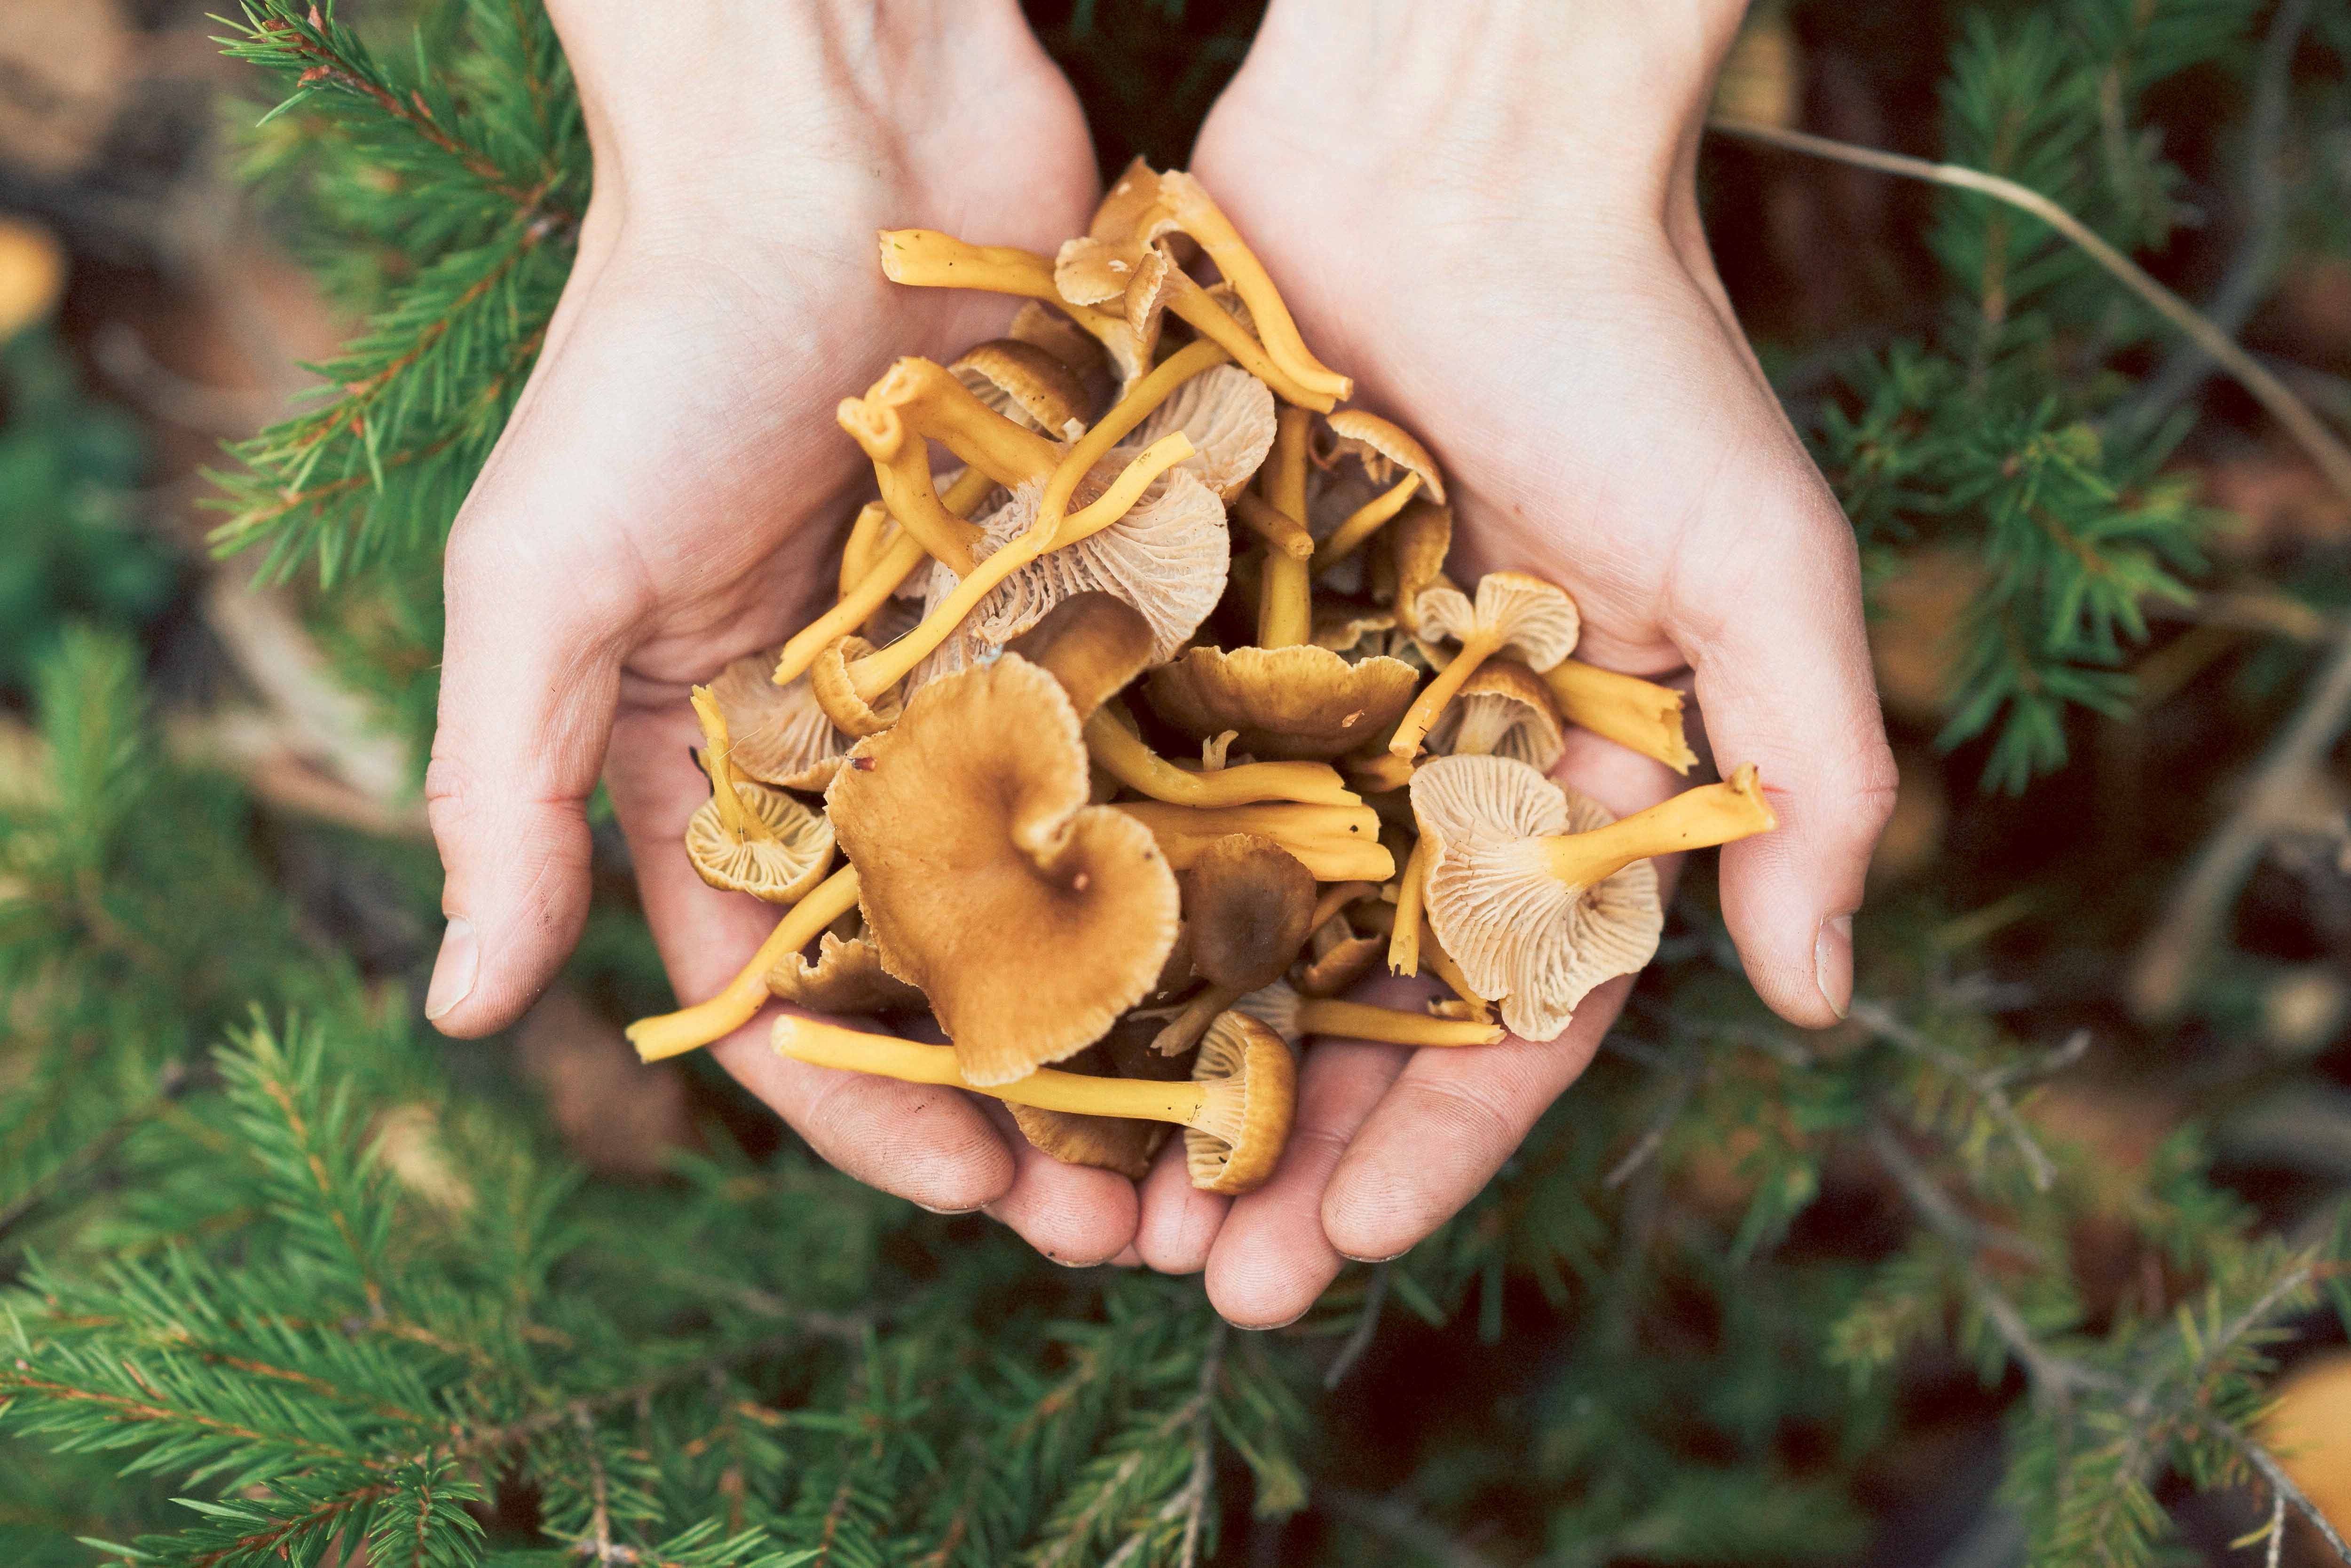 A handful of wild mushrooms